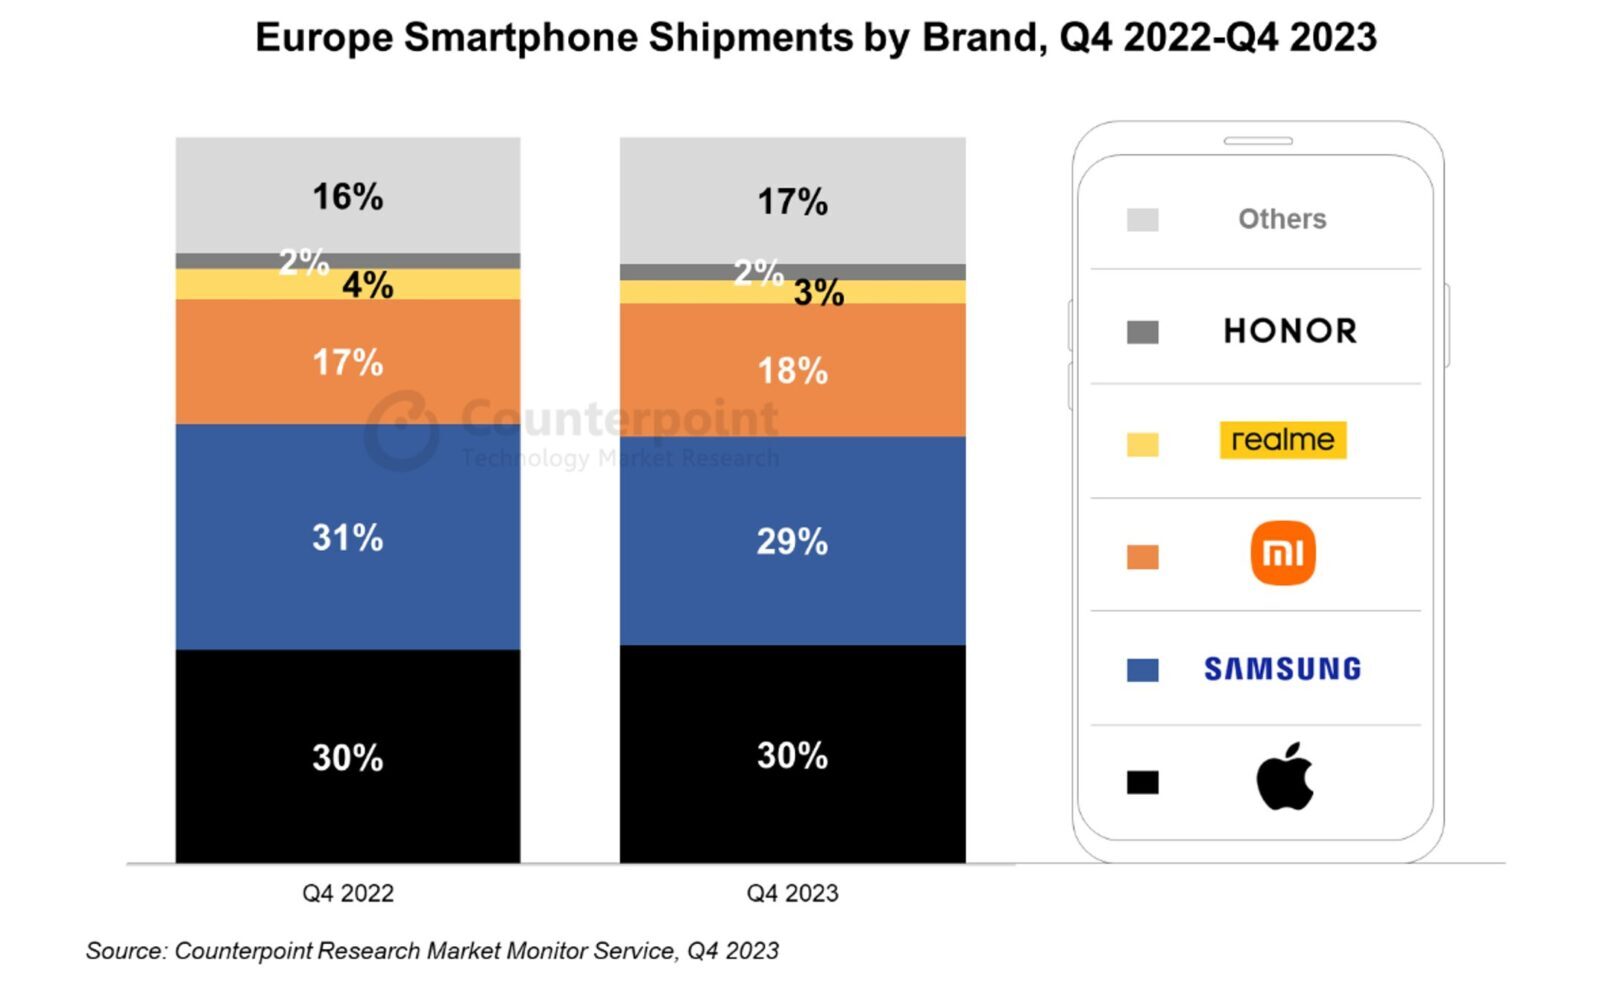 Europe Smartphone Shipments by Brand, Q4 2022 - Q4 2023